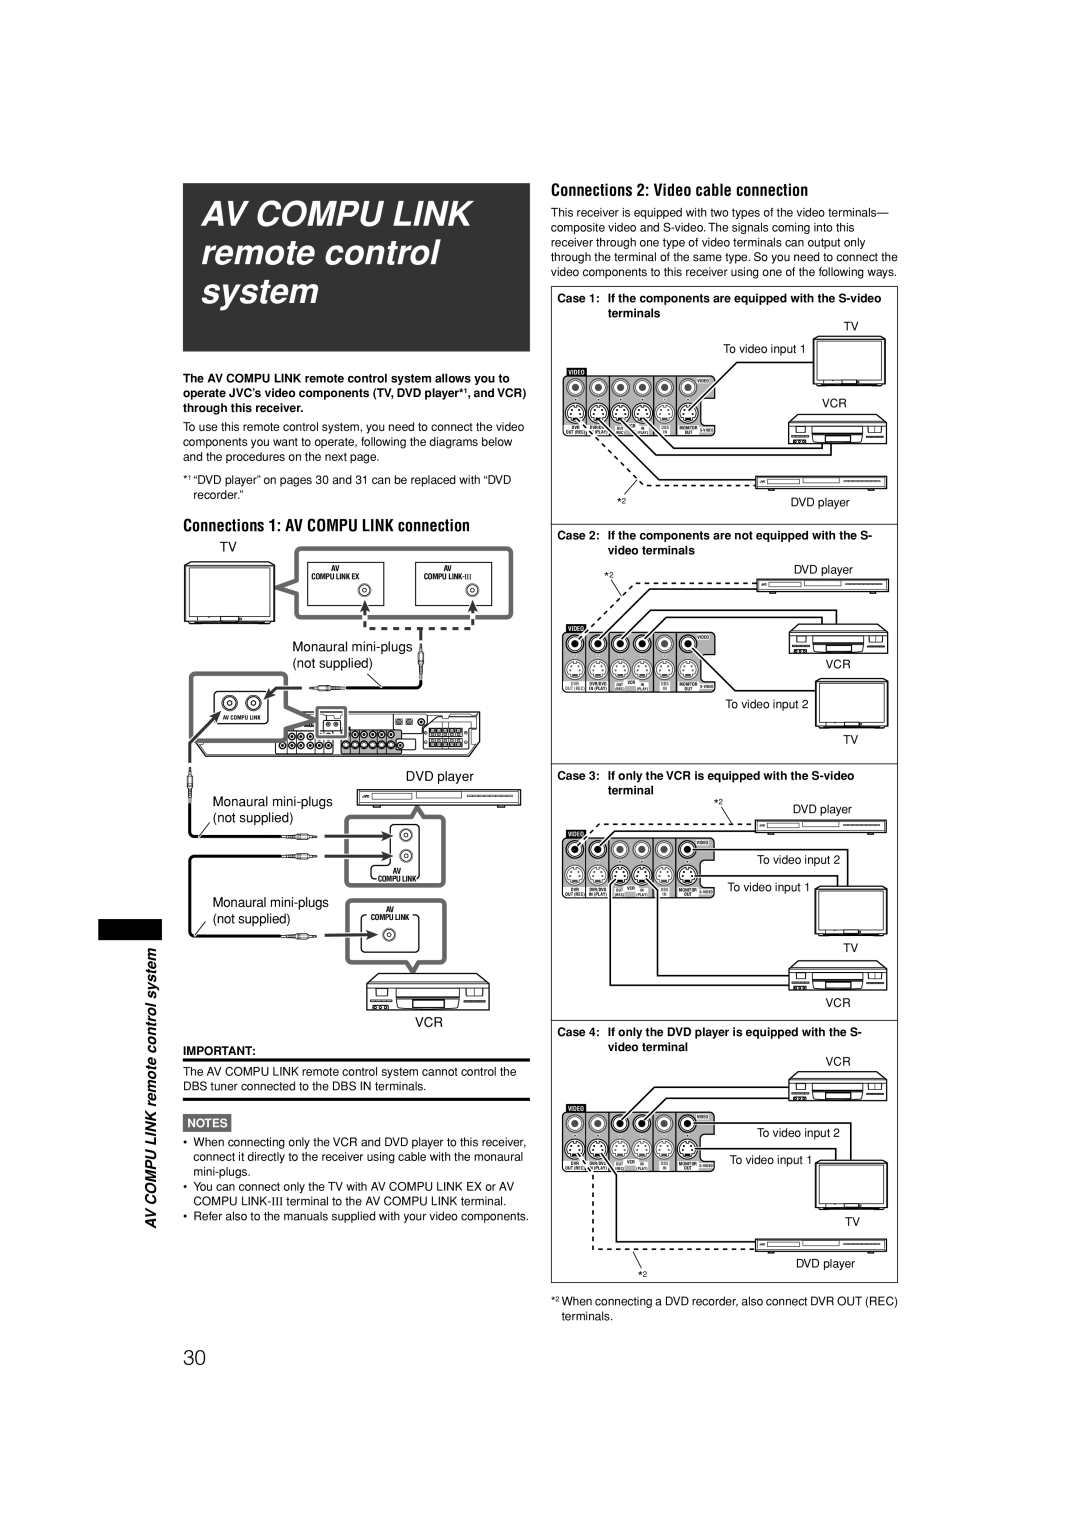 JVC RX-E11S manual AV COMPU LINK remote control system, Connections 1: AV COMPU LINK connection, Notes 